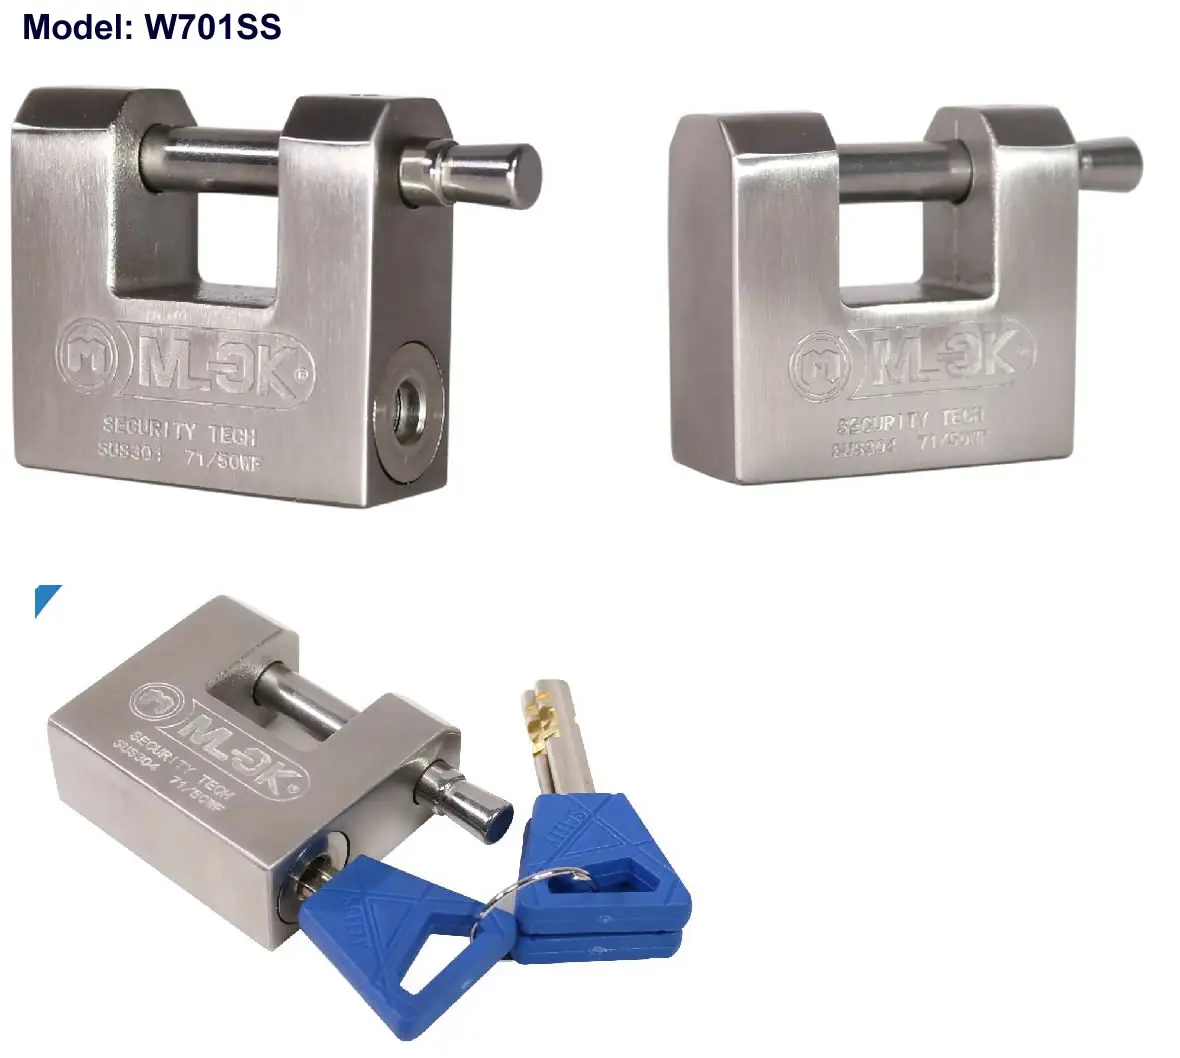 Mlock 최고의 자물쇠 녹 방지 컨테이너 사용 키 잠금 70mm 80mm 중장비 직사각형 키 자물쇠 마스터 키